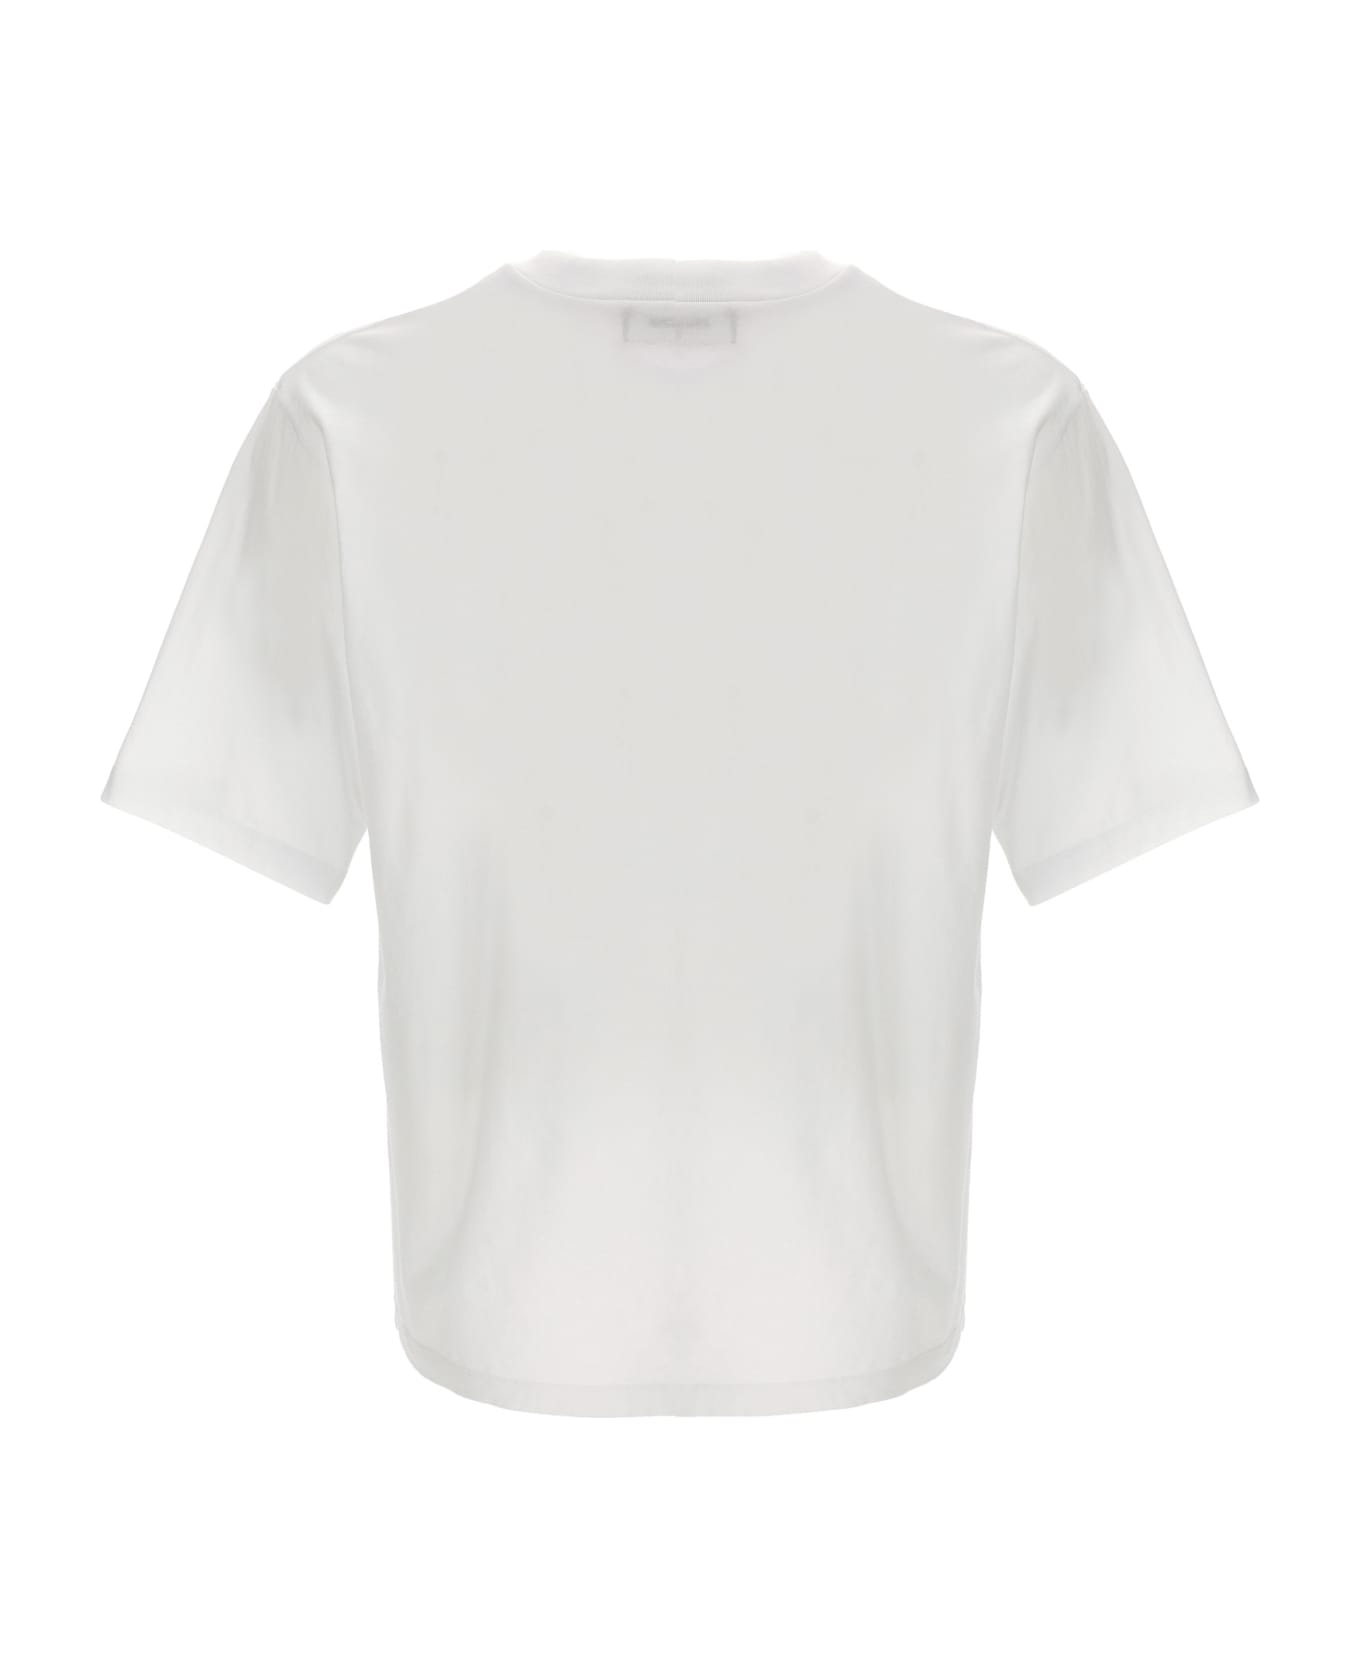 Dsquared2 Logo T-shirt - White/Black